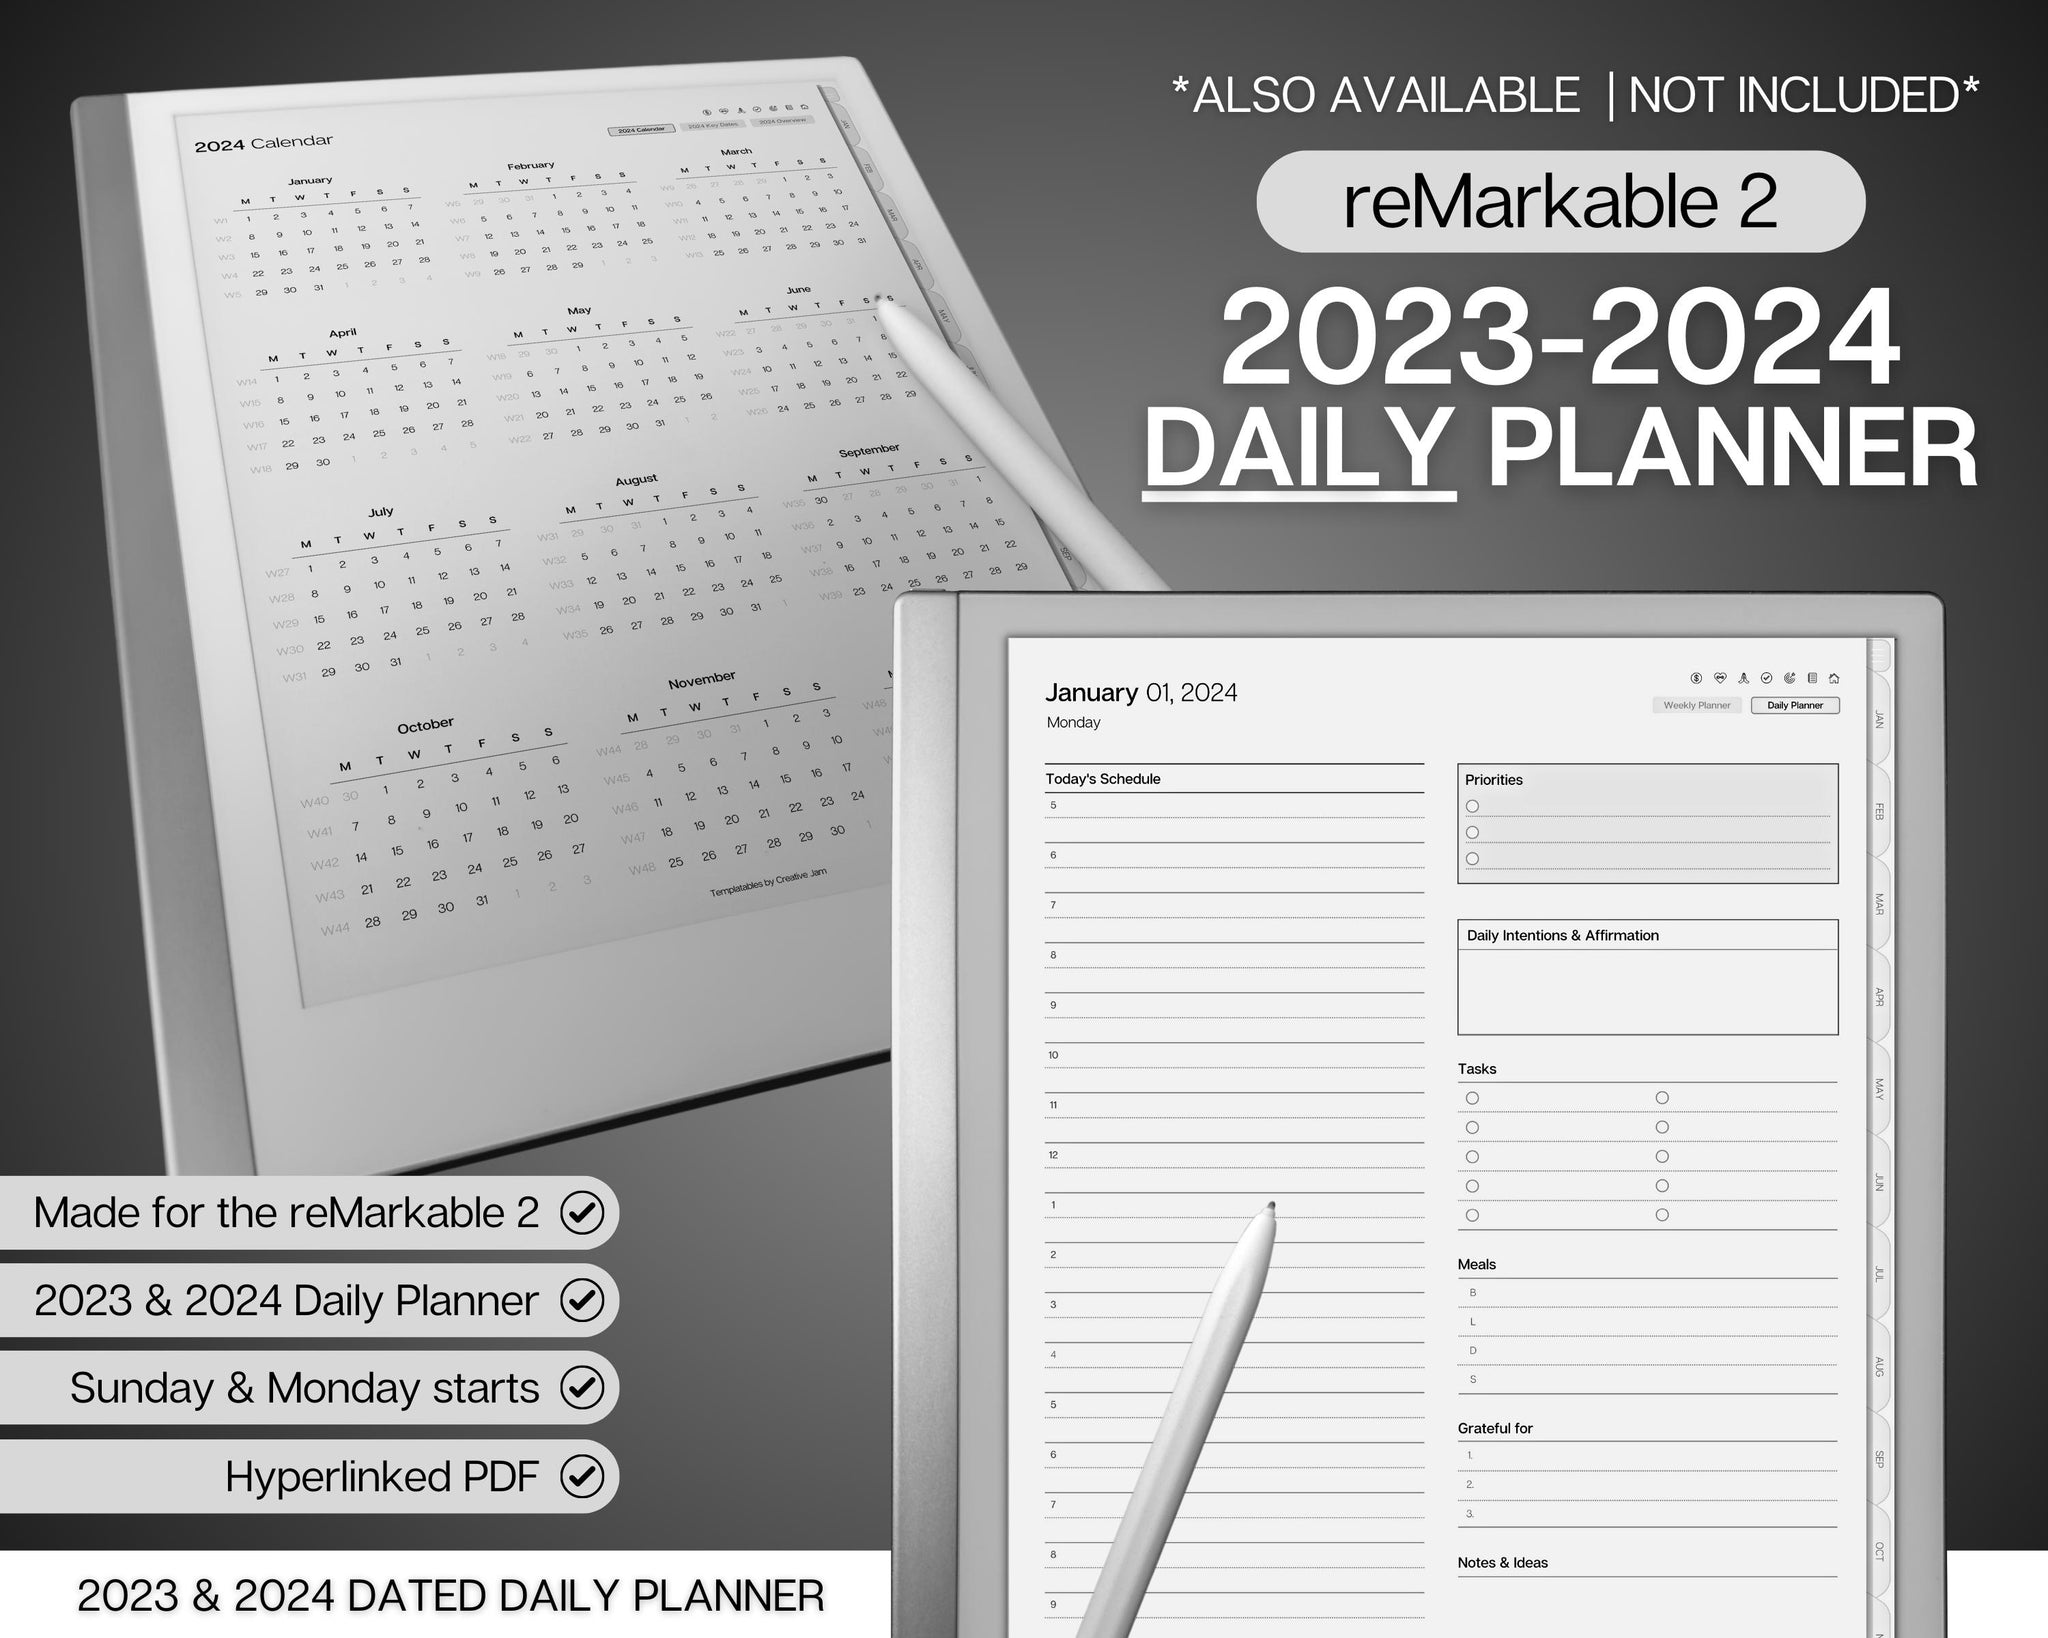 reMarkable 2 Weekly Planner 2023 2024 Digital Life Planner